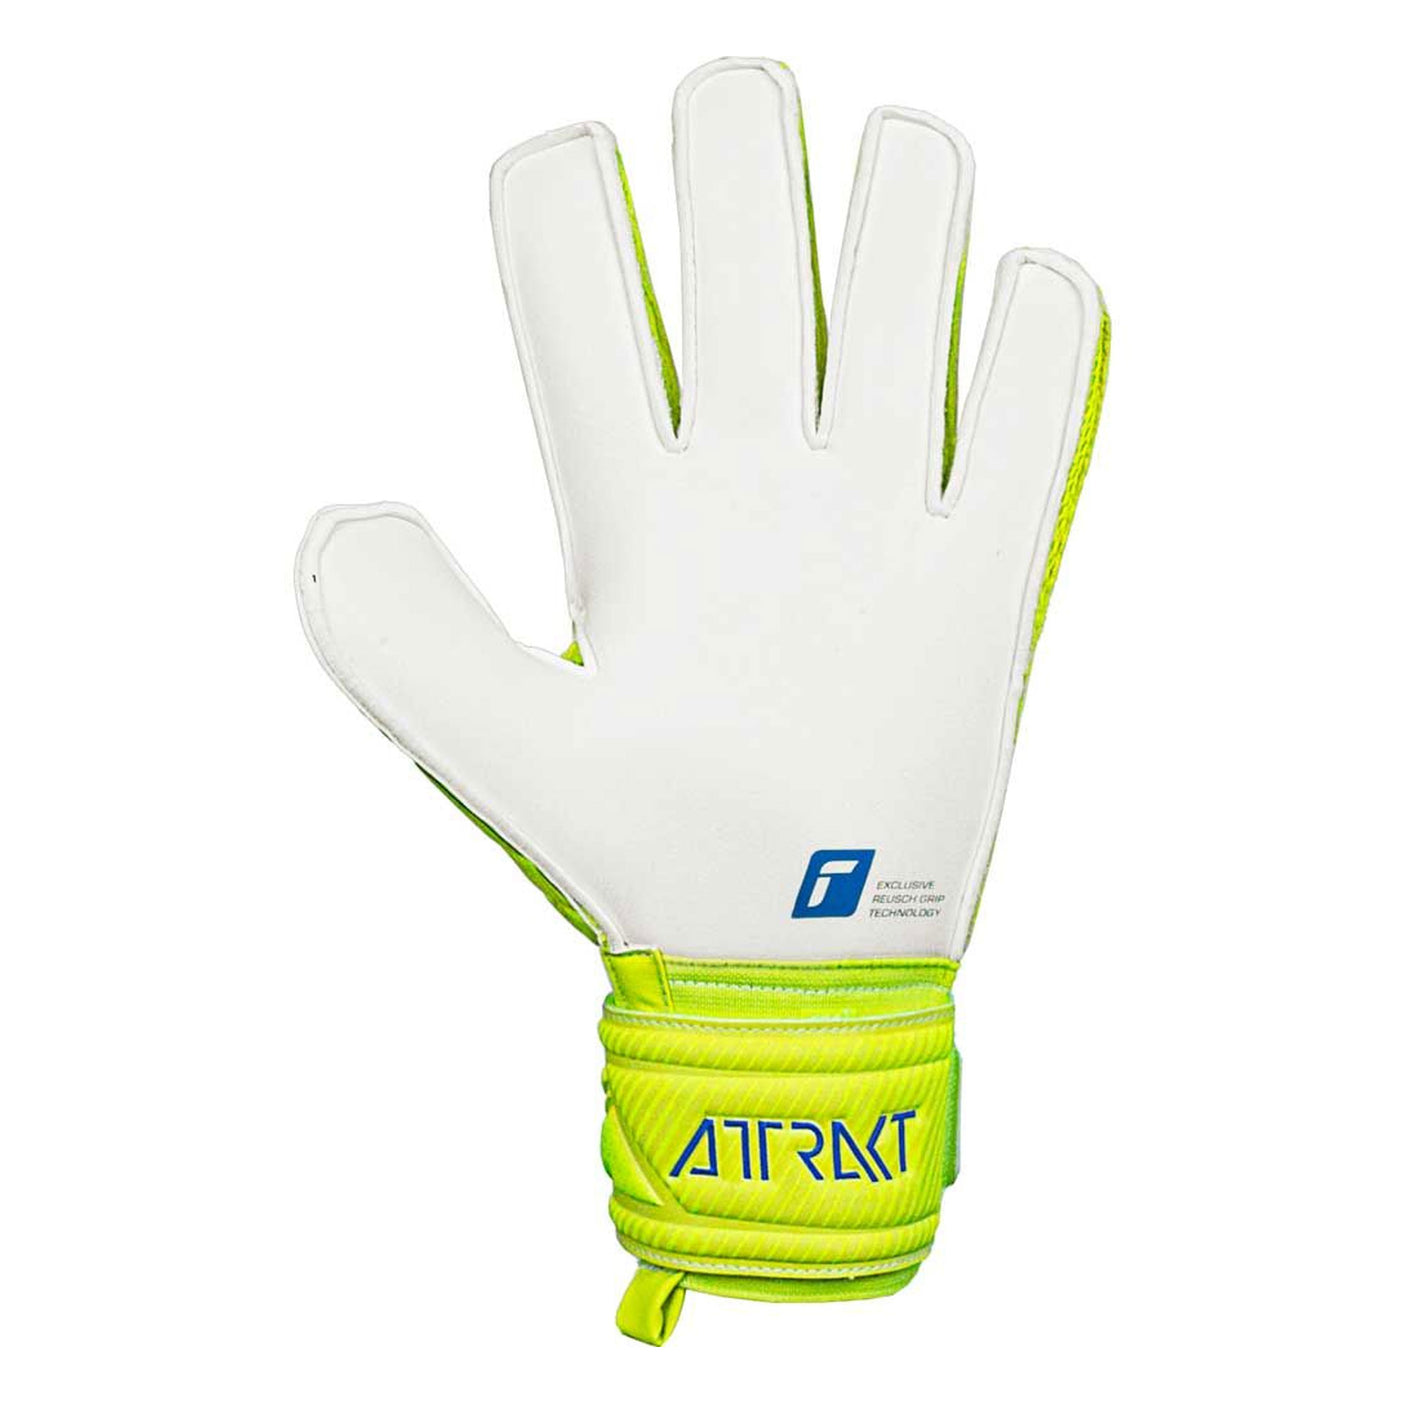 Reusch Men's Attrakt Grip Goalkeeper Gloves Yellow/White Back